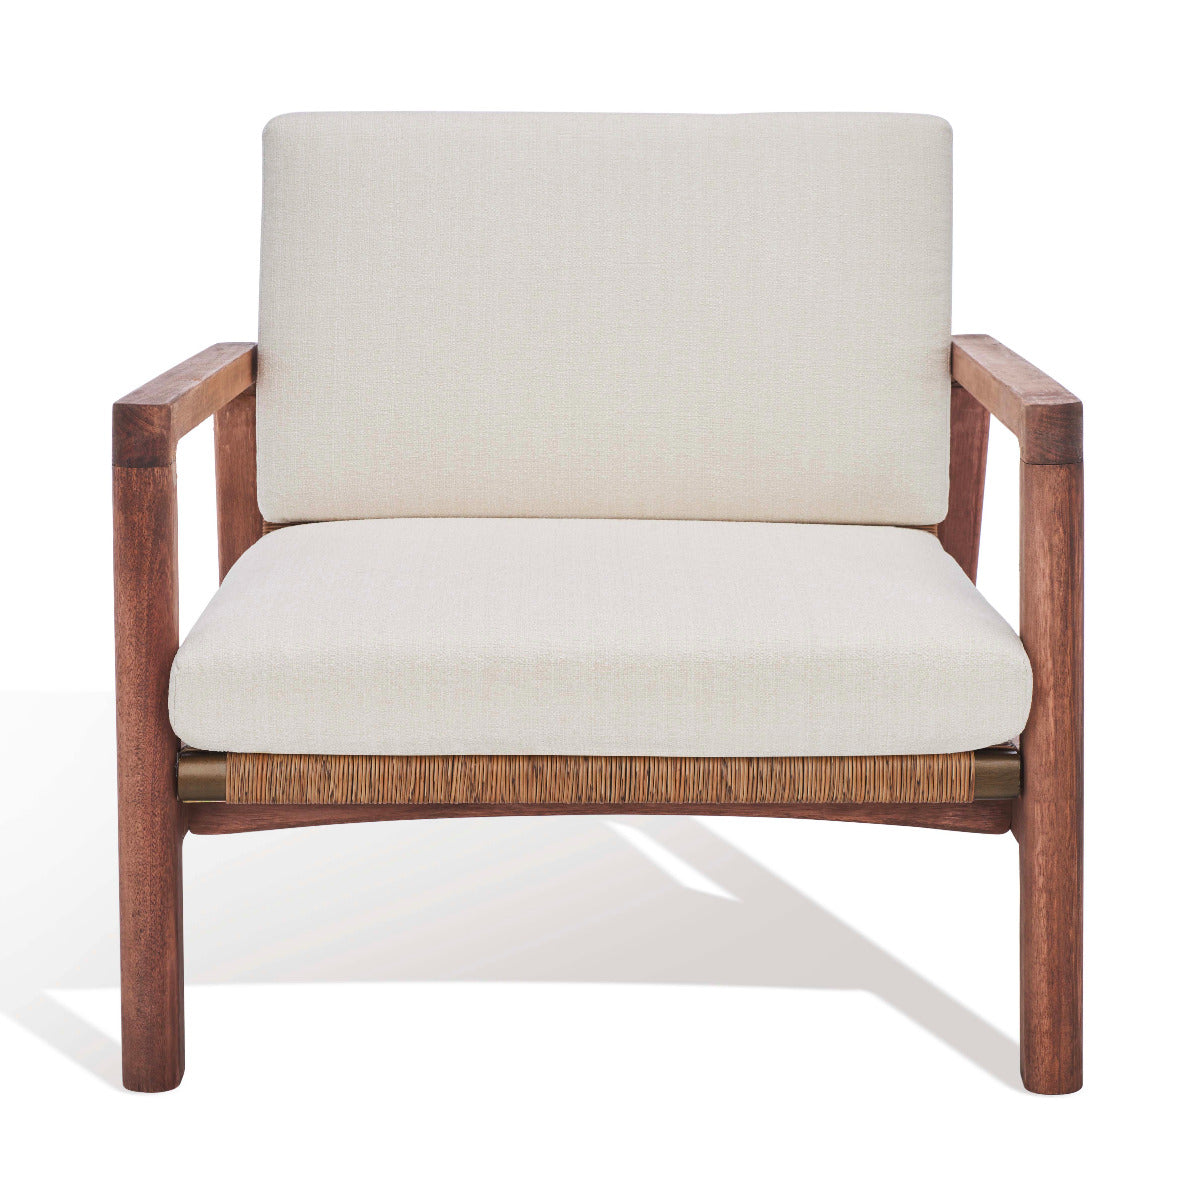 Safavieh Donnamaria Wicker Patio Chair, Natural / White